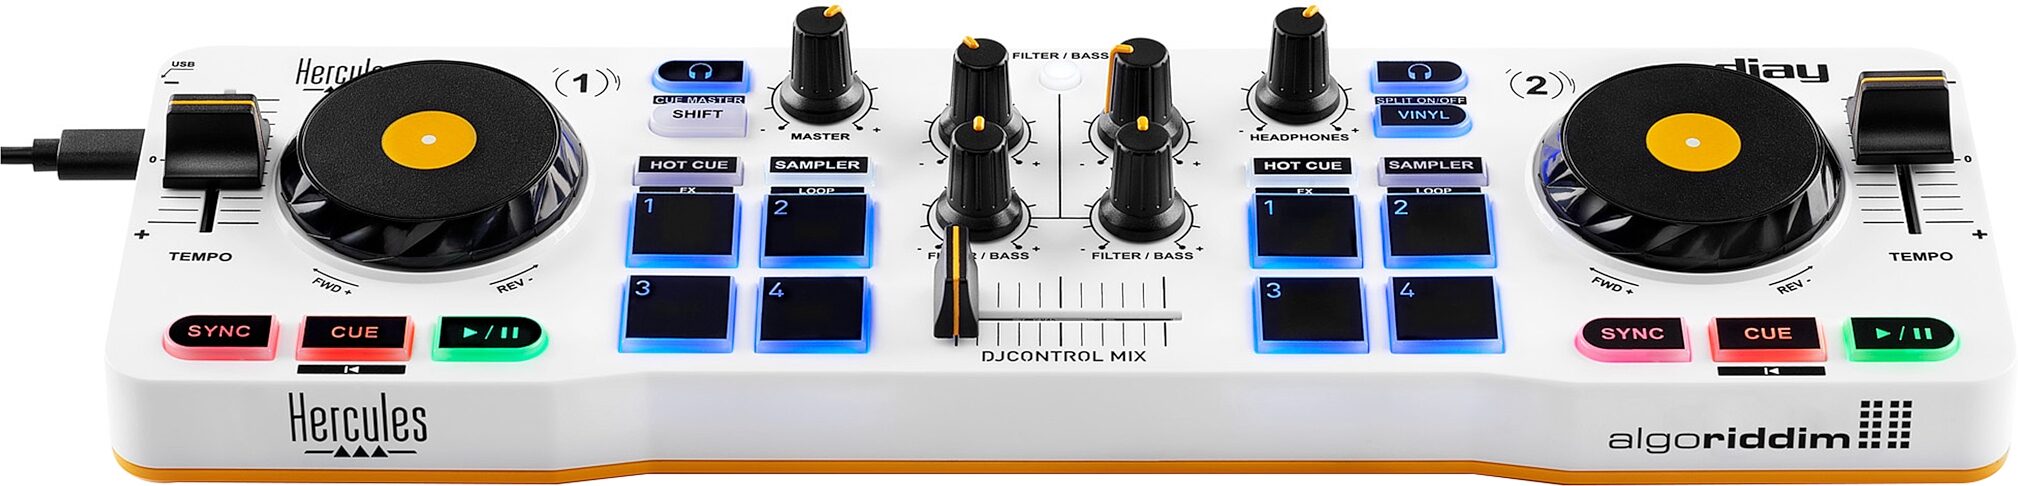 Hercules DJControl Mix DJ Controller | zZounds